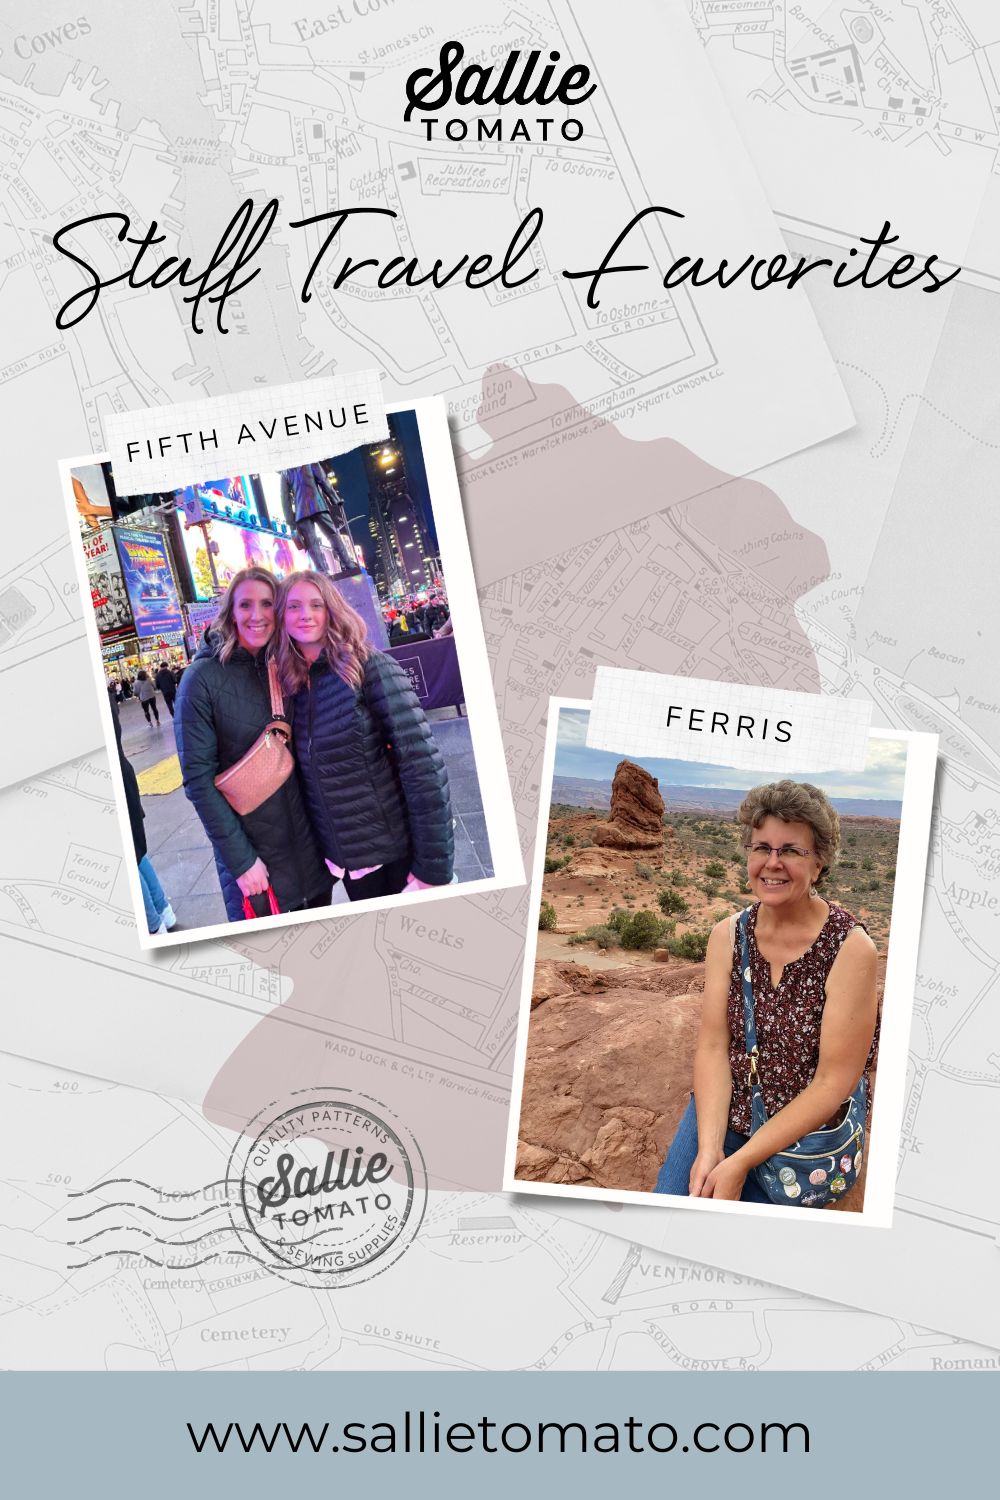 Staff Travel Bag Favorites!